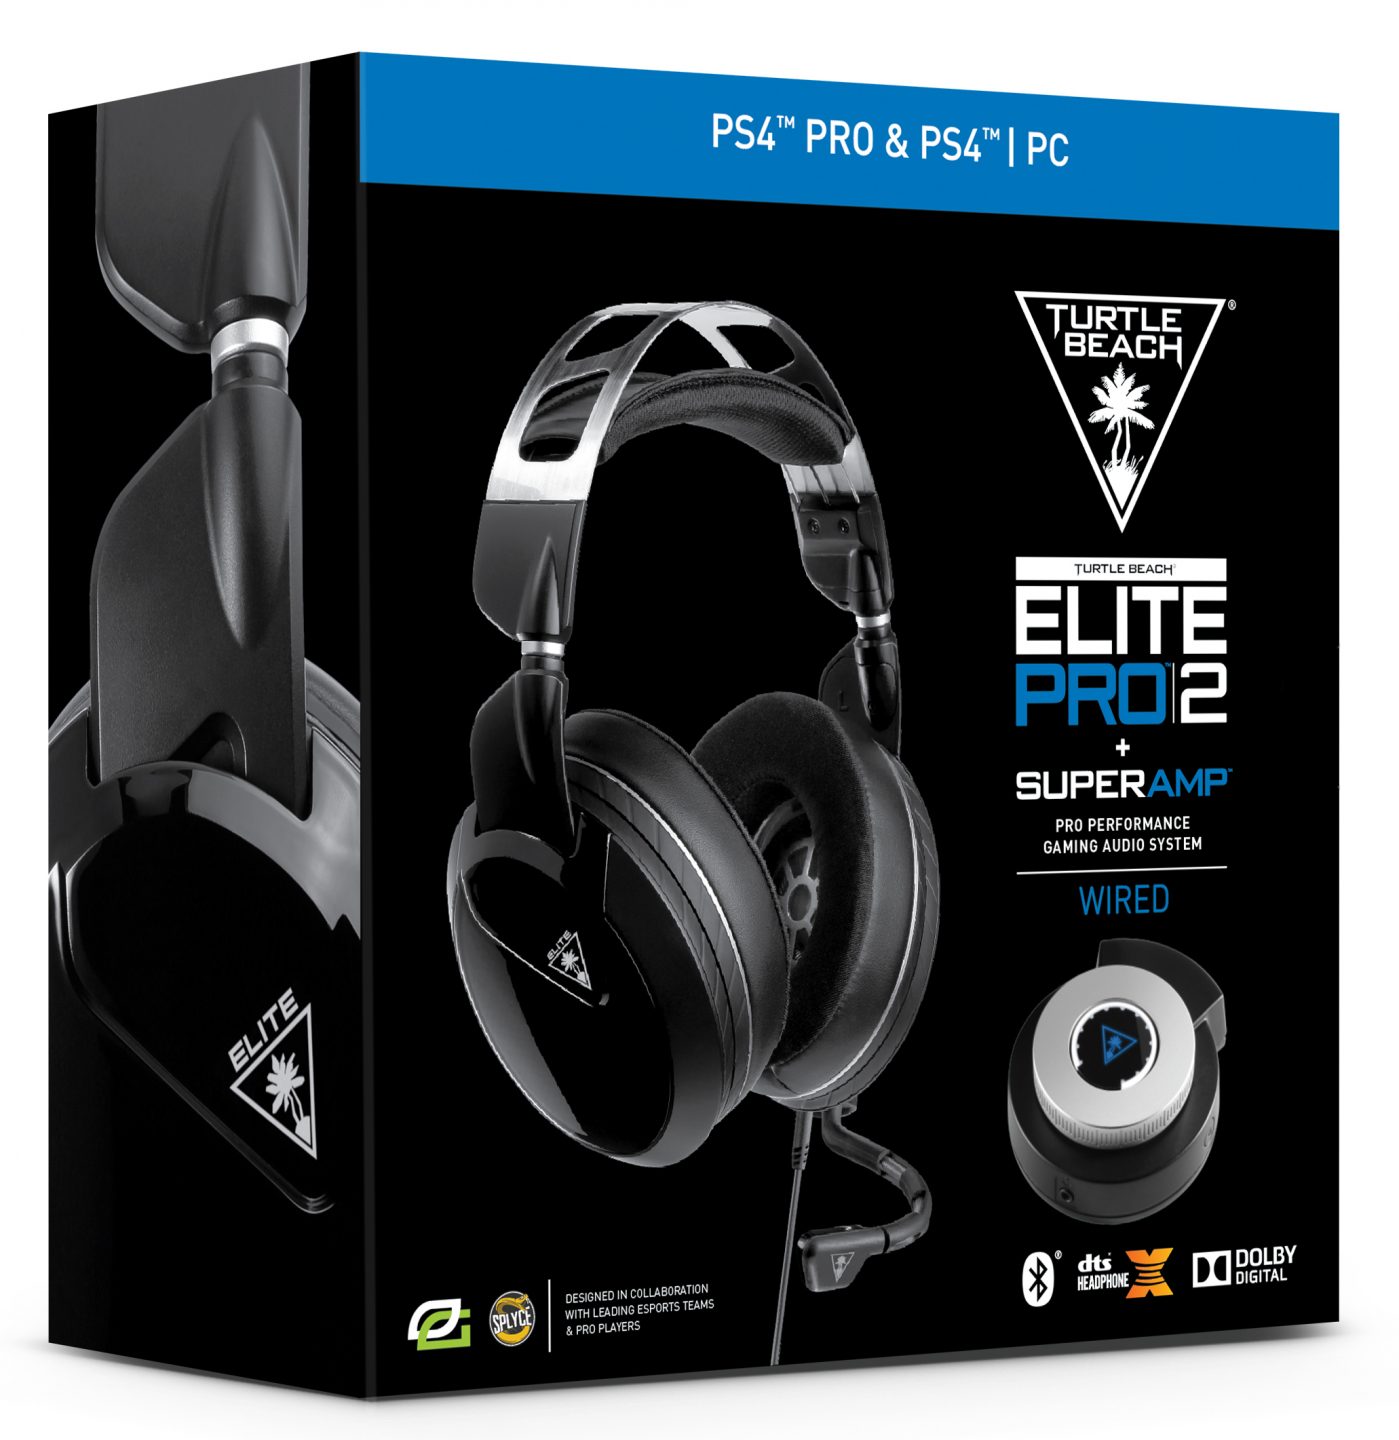 Elite Pro 2 + Superamp Pro Performance Gaming Audio System PlayStation 4 (Turtle Beach)